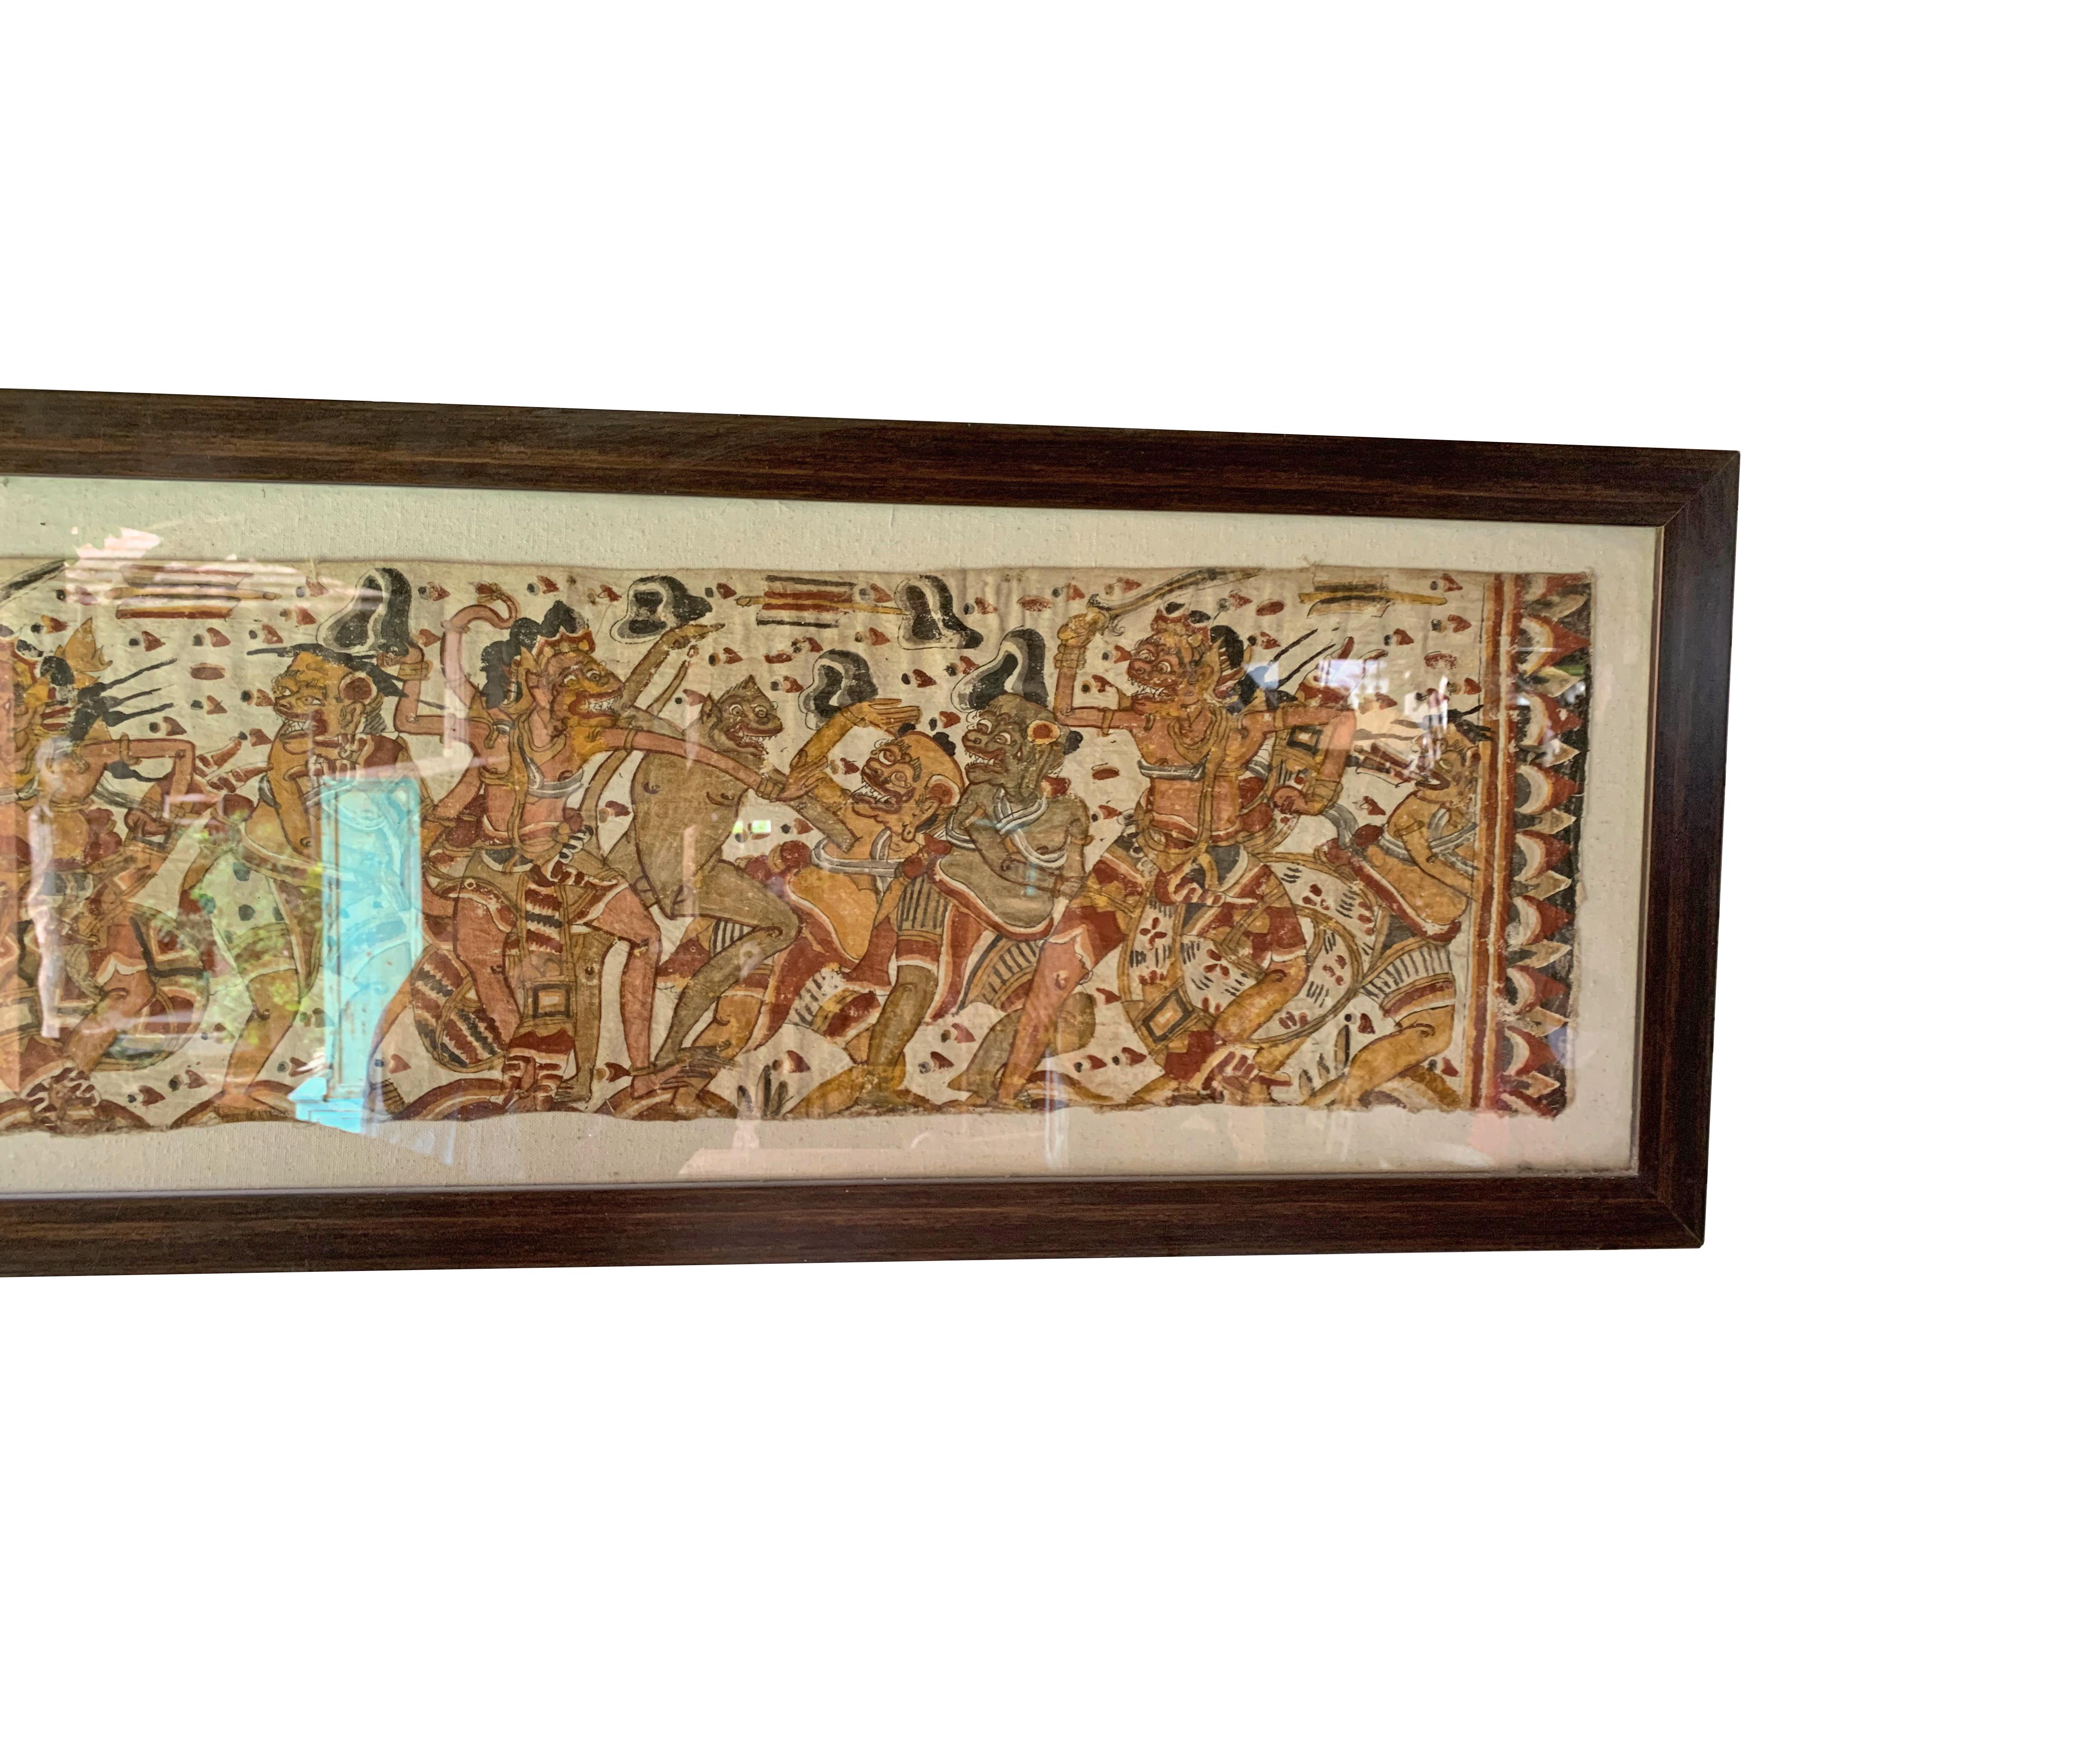 Balinese Bali Hindu Textile Framed 'Kamasan' Painting, Indonesia, Early 20th Century